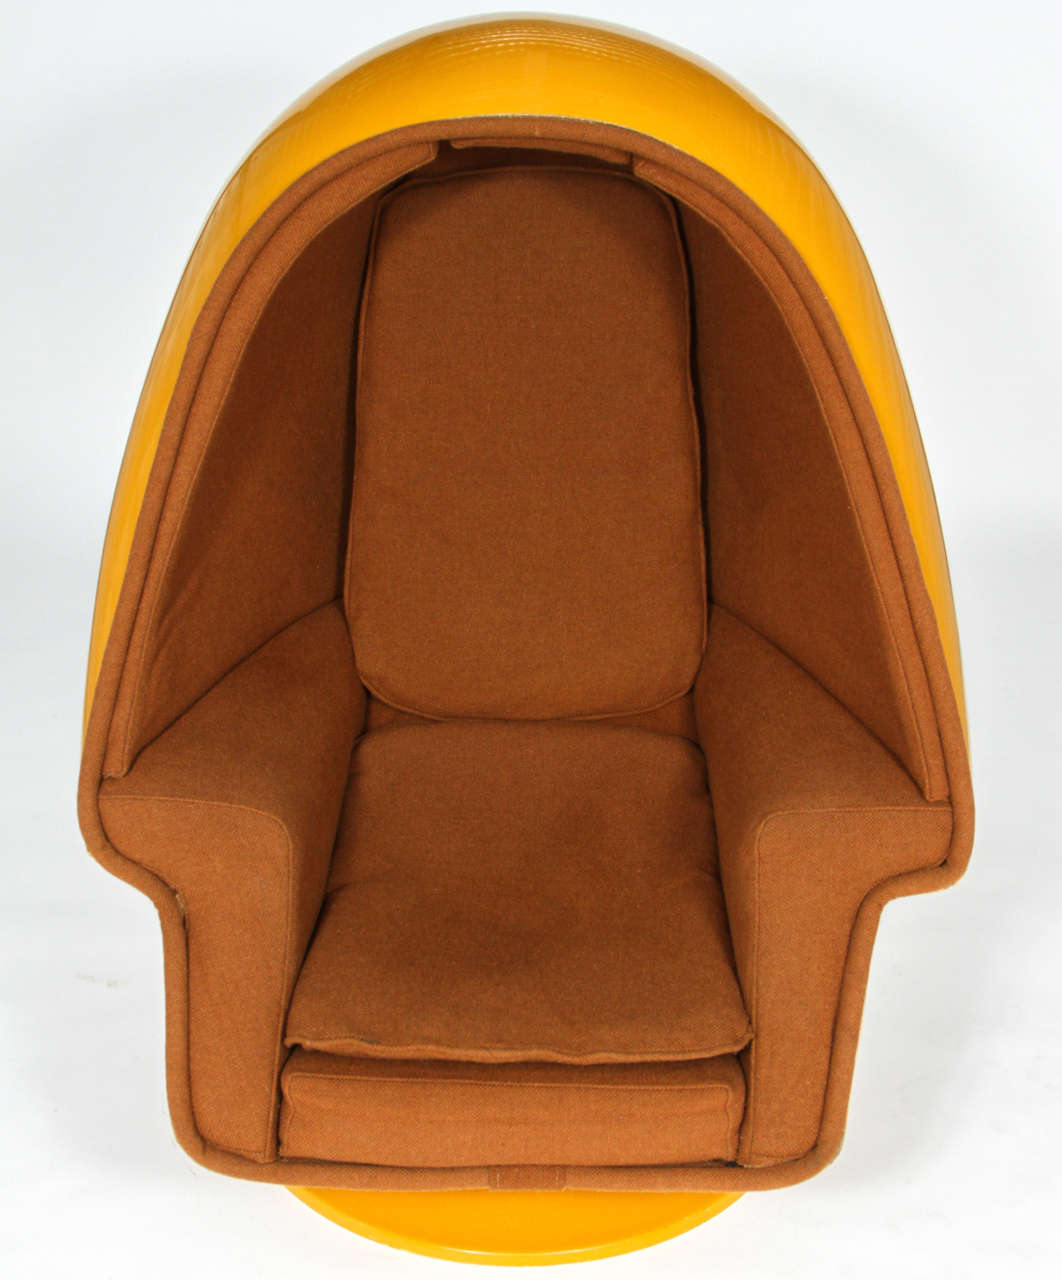 1970 stereo egg chair